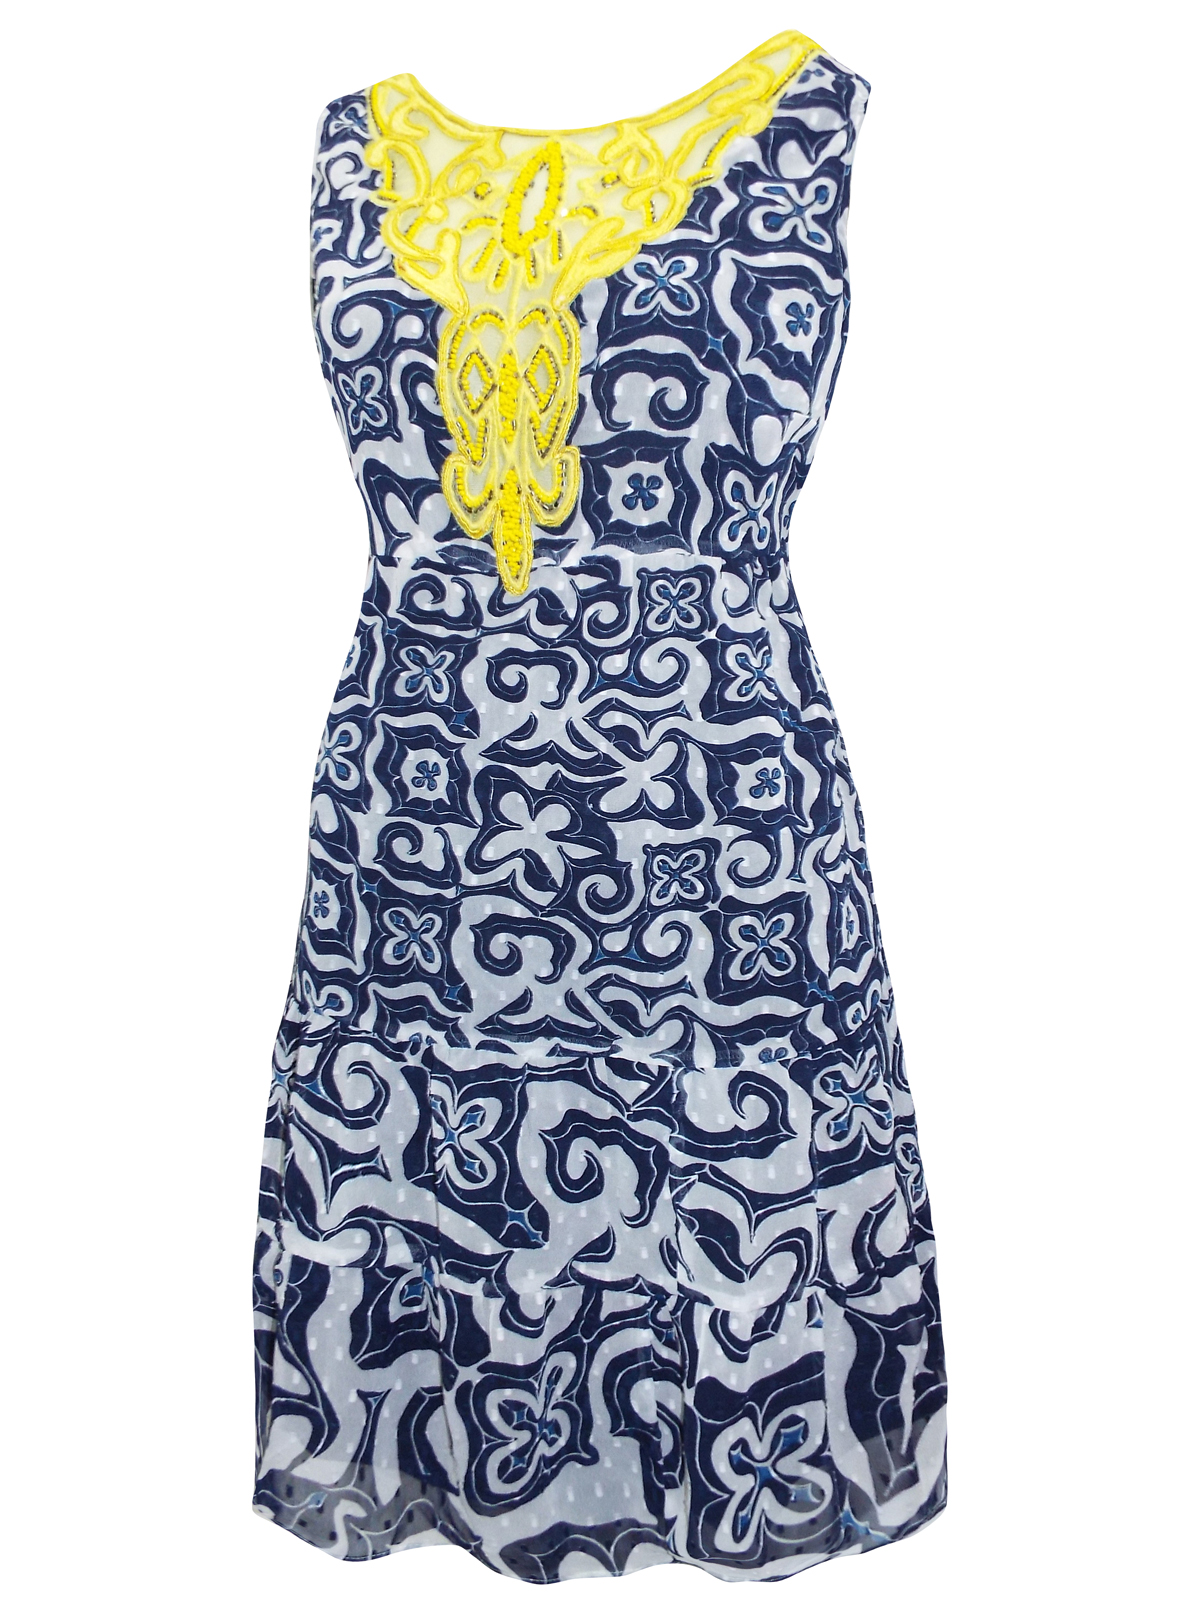 Desigual - - D3sigual Asha NAVY Embellished Lace Panel Printed Dress ...